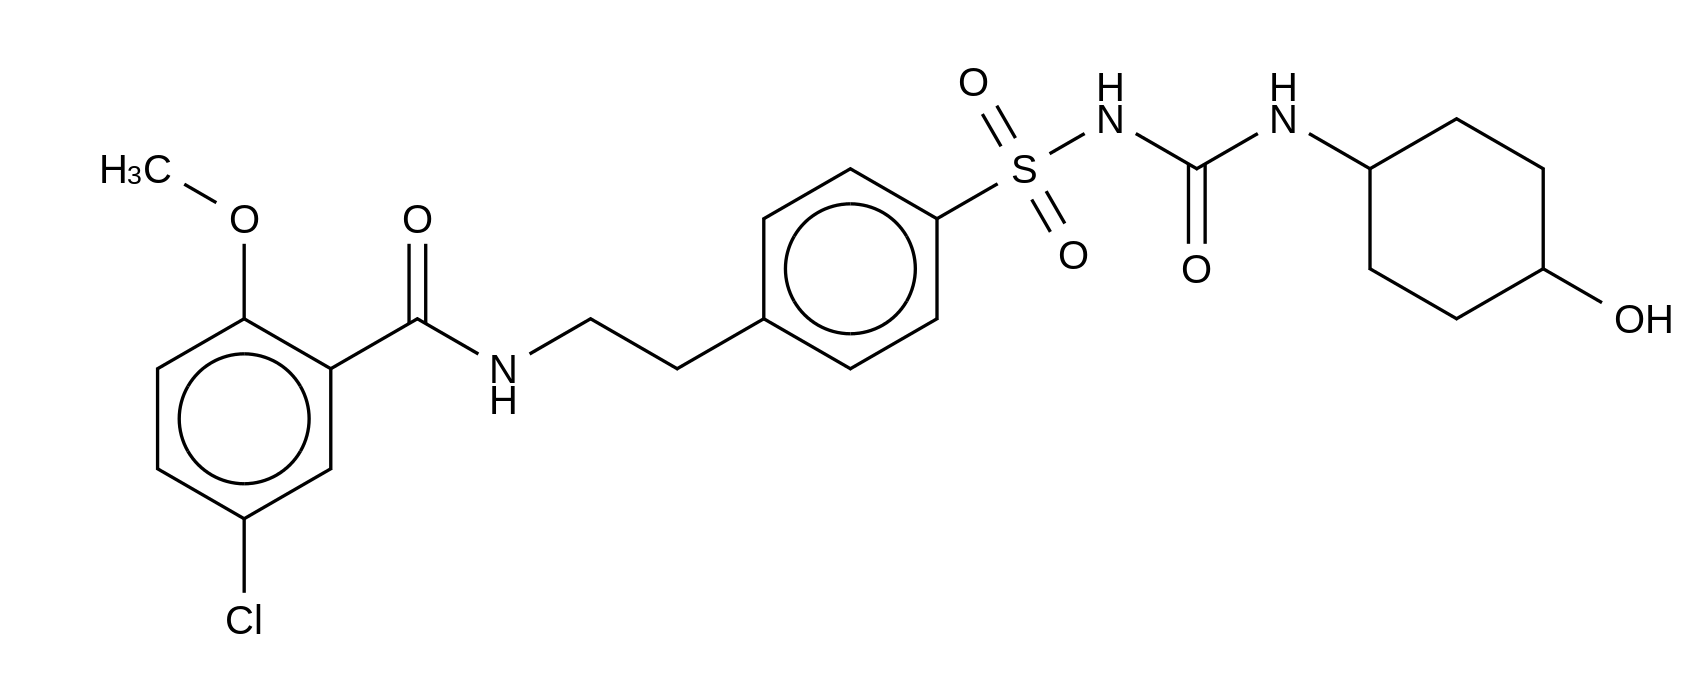 rac cis-4-Hydroxy Glyburide